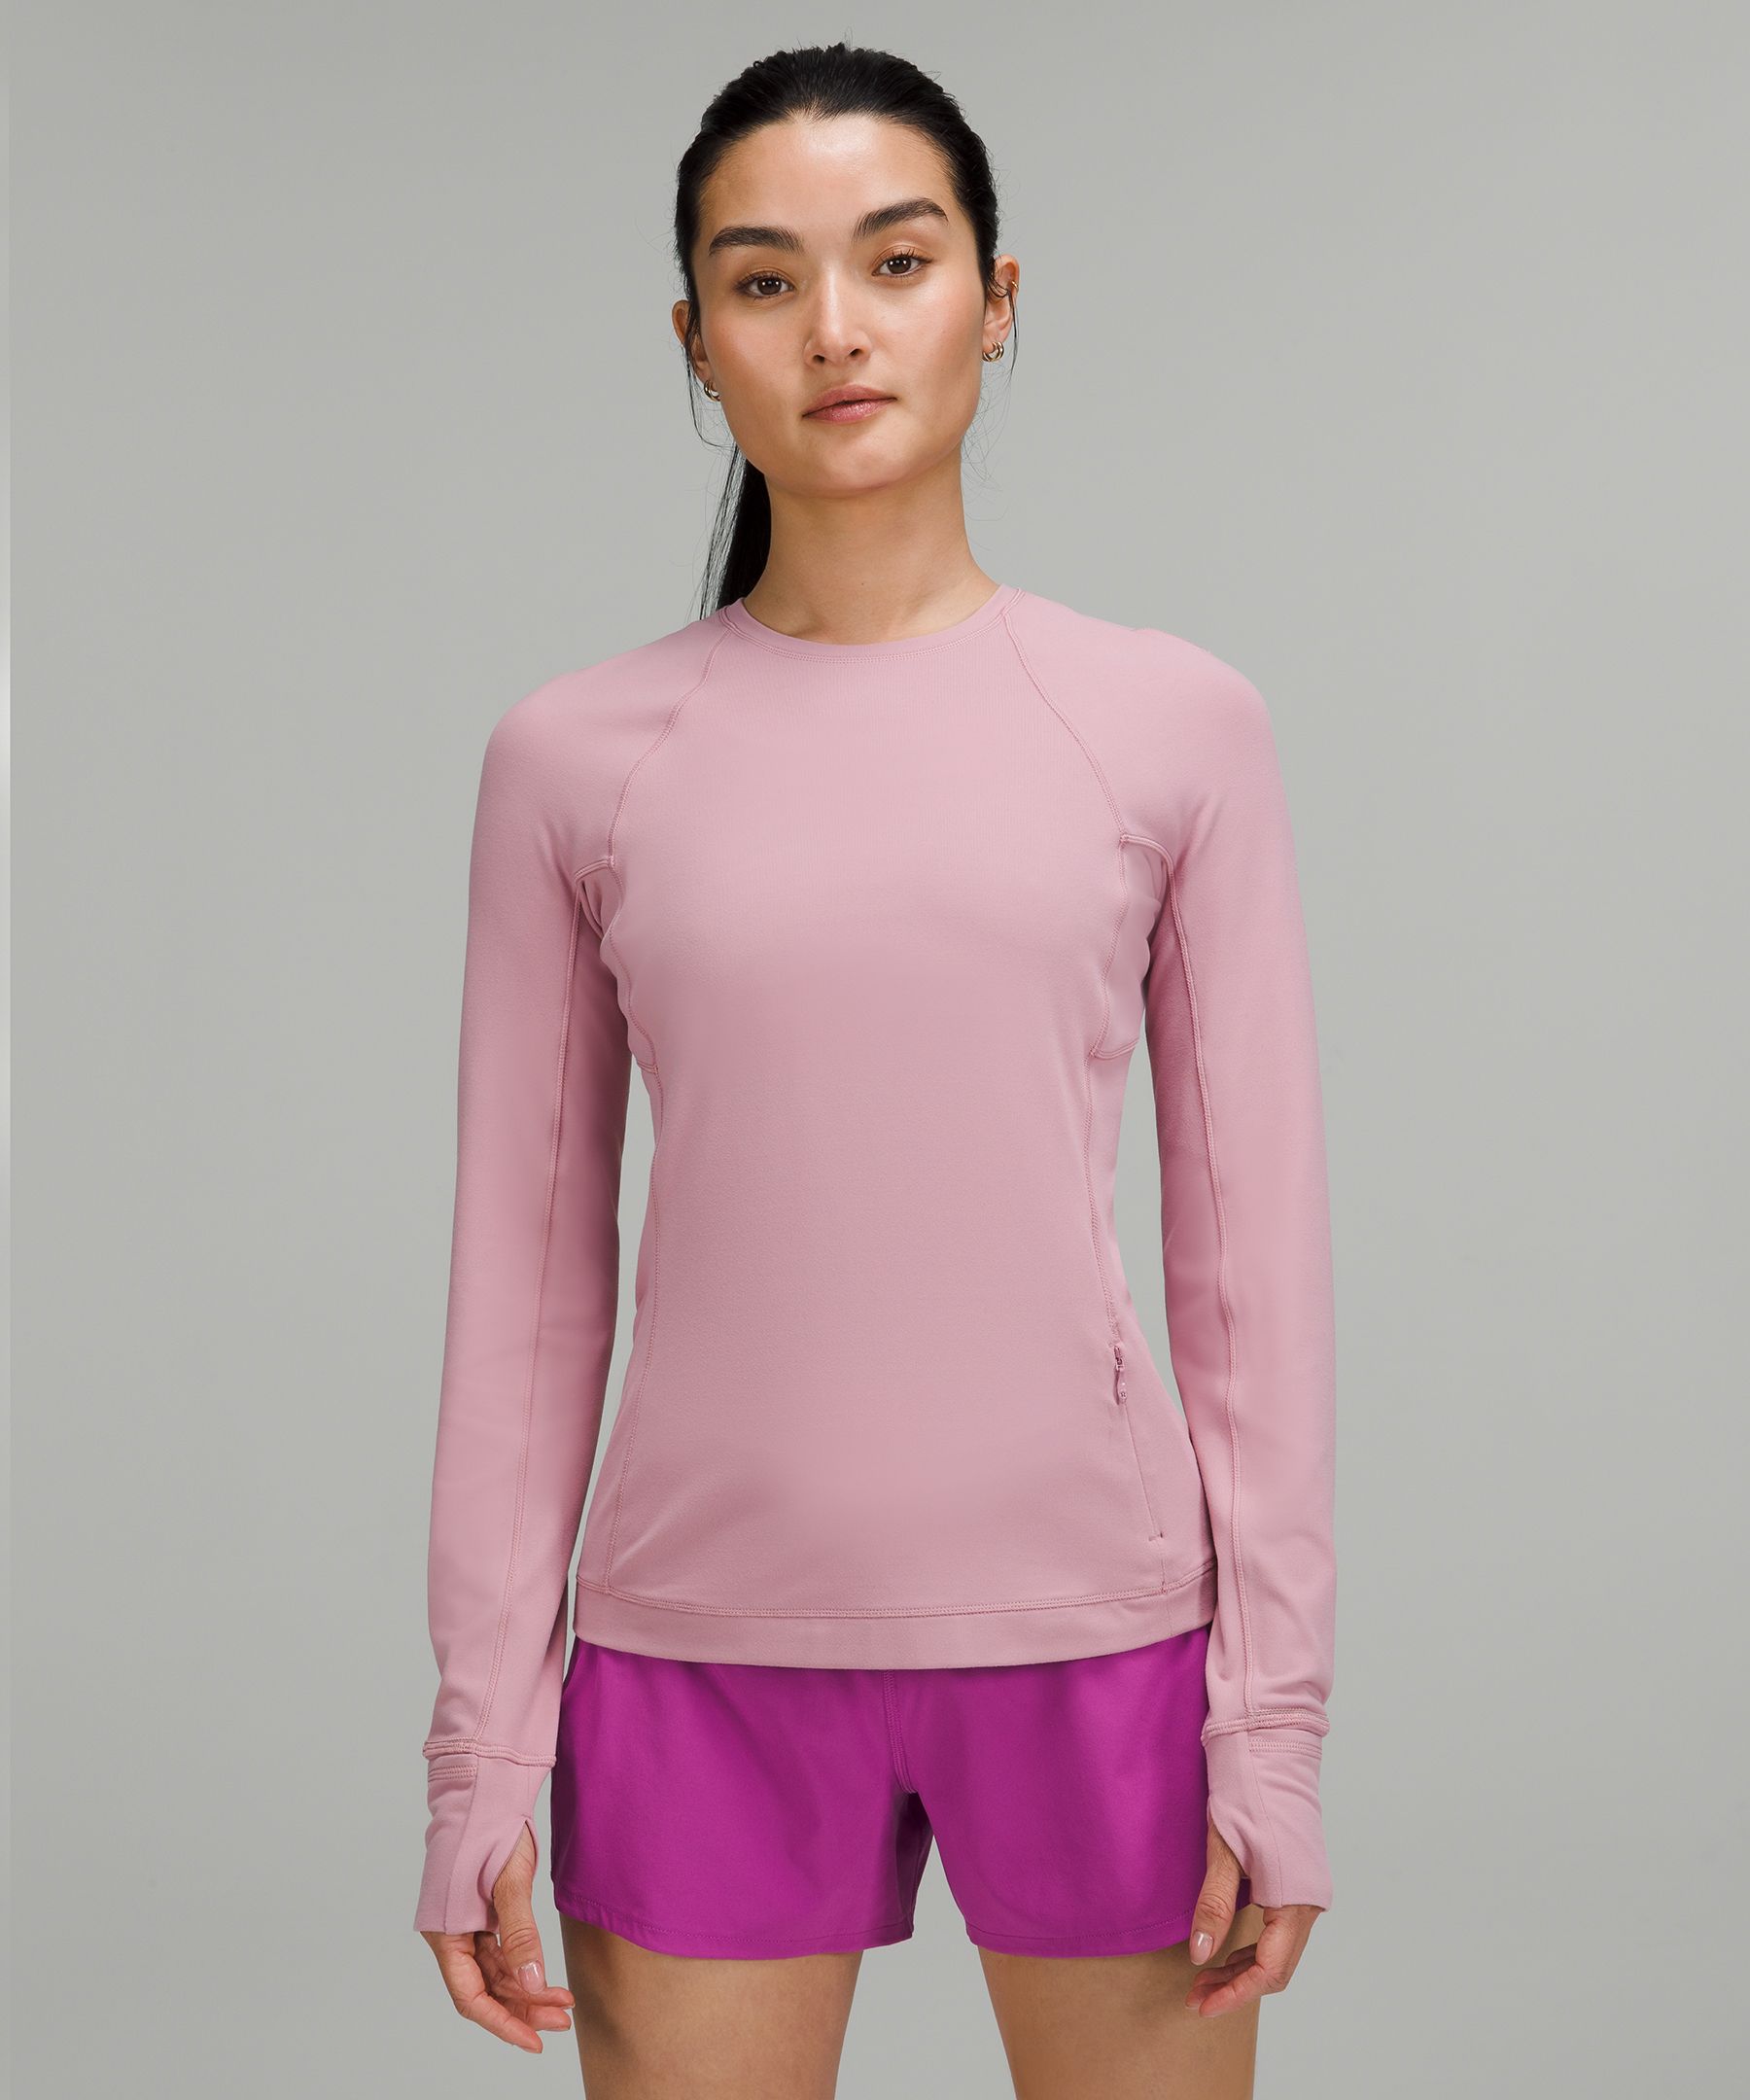 Women's Pink Long Sleeve Shirts | lululemon